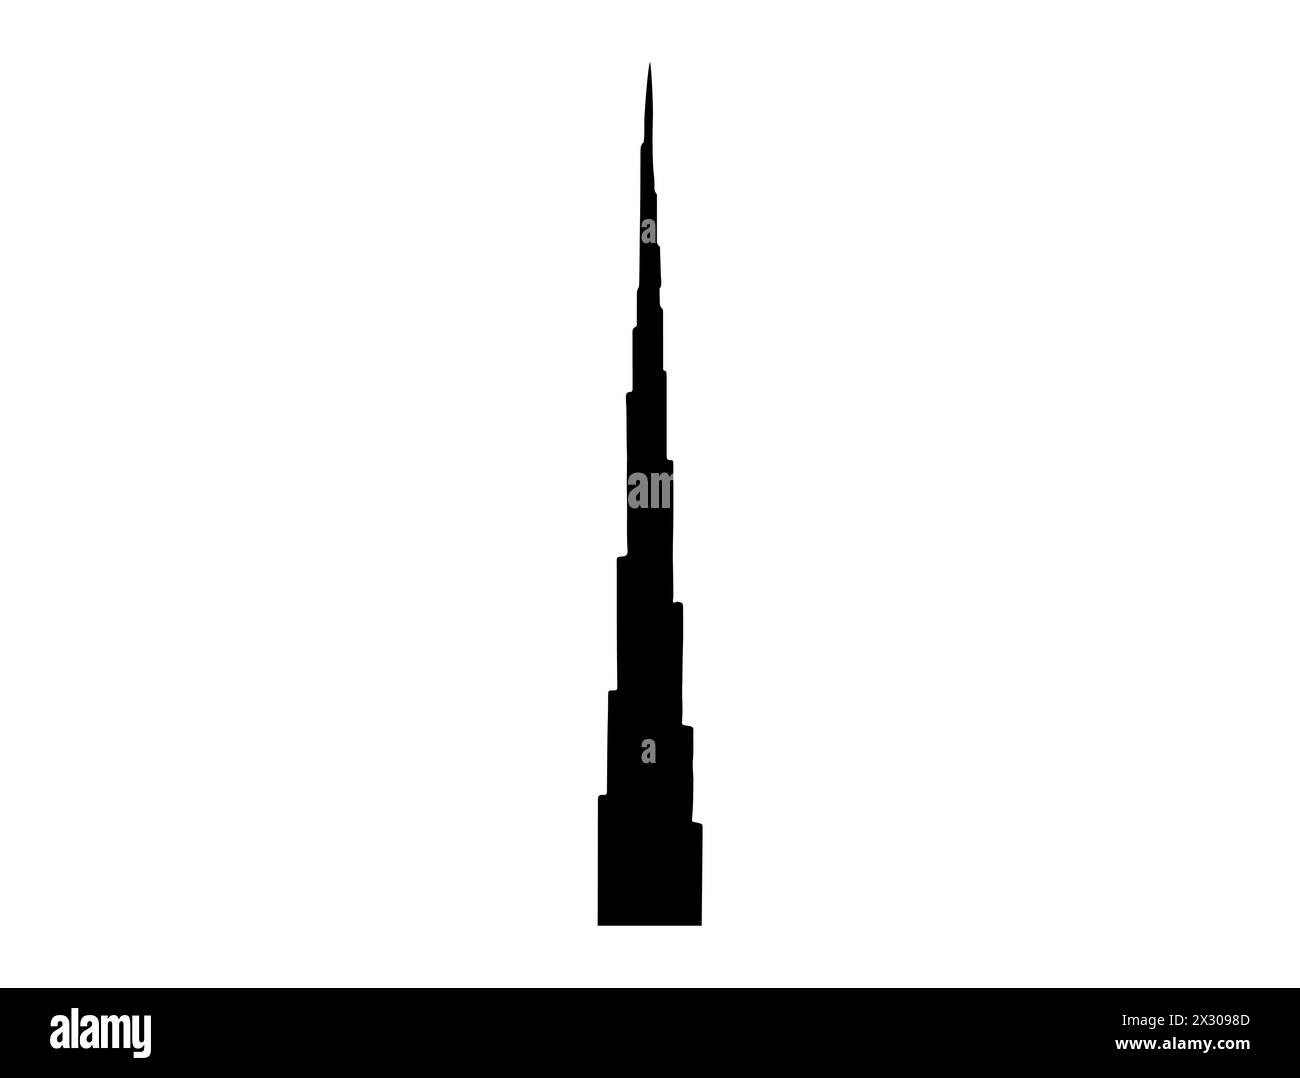 Burj khalifa silhouette vector art Stock Vector